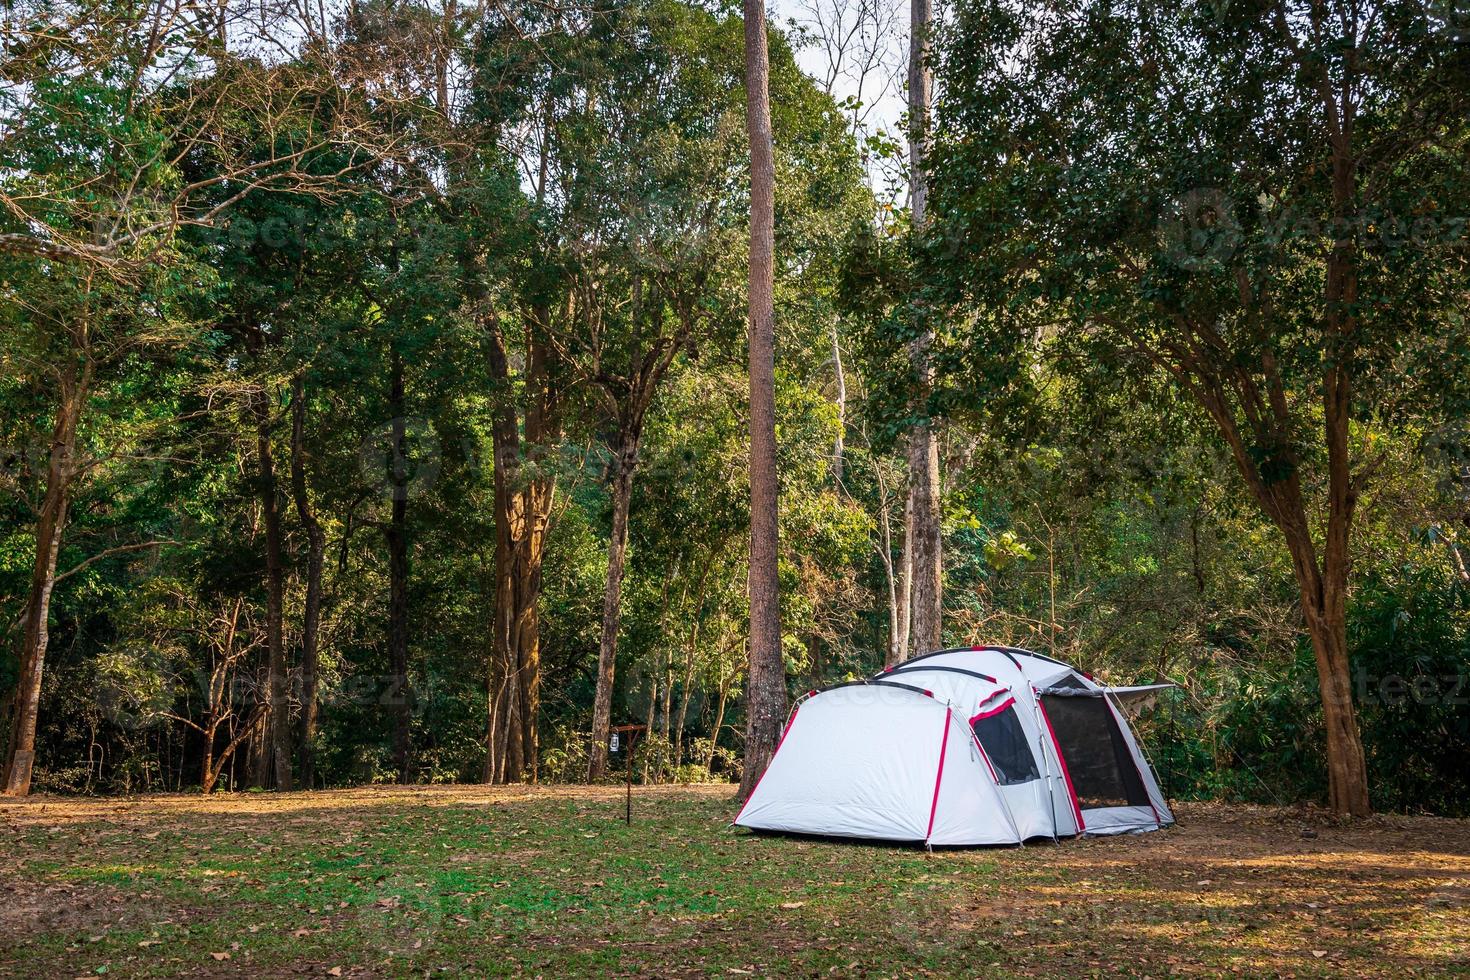 acampamento e barraca no parque natural foto